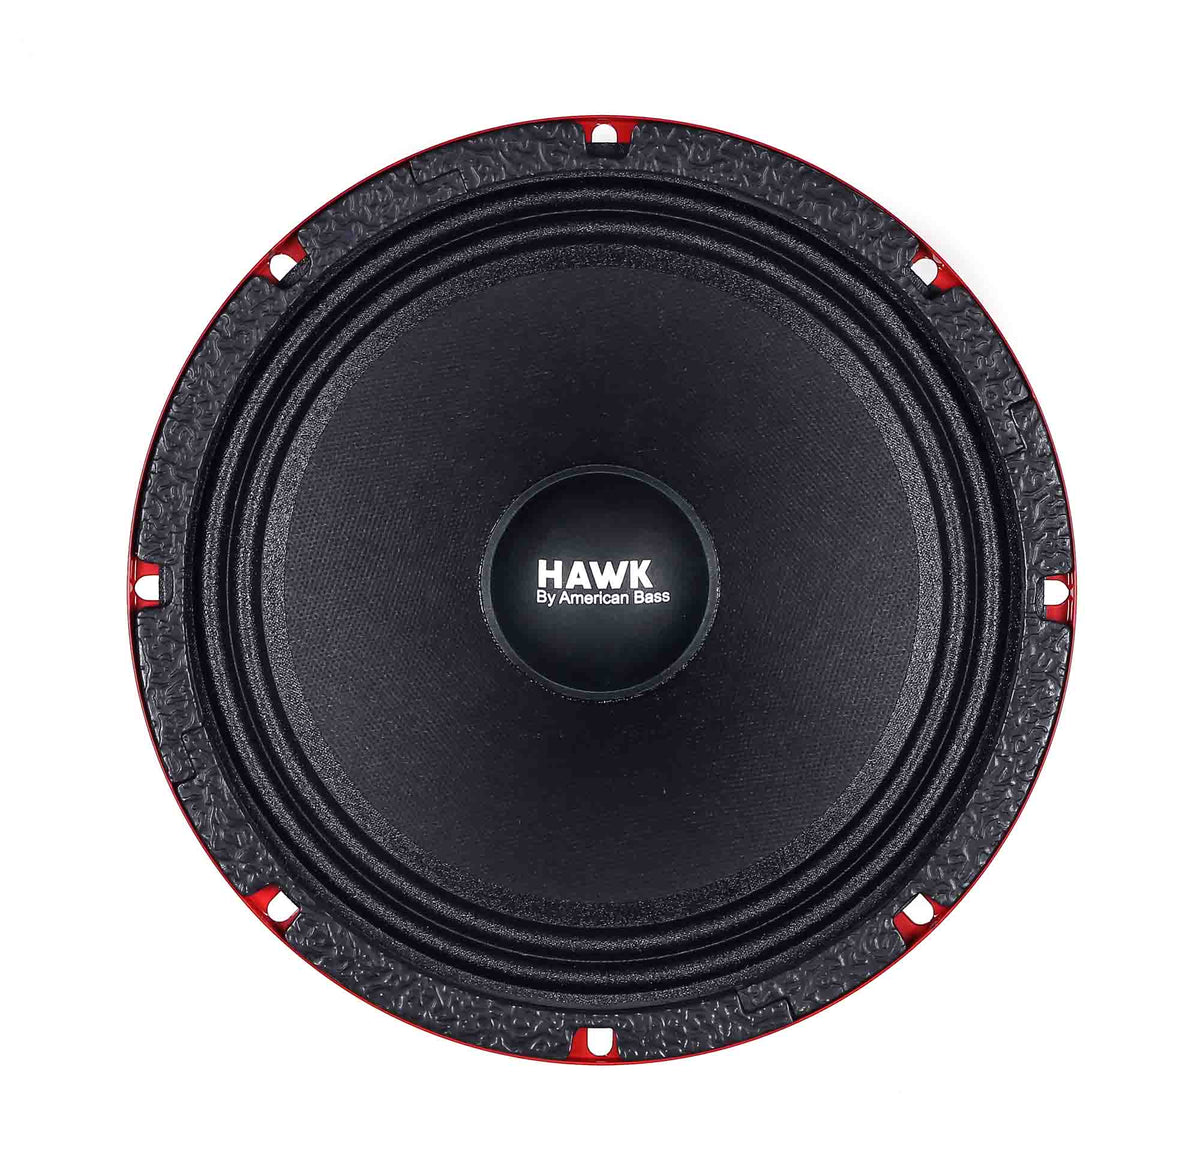 HAWK 8" Speaker - American Bass Audio